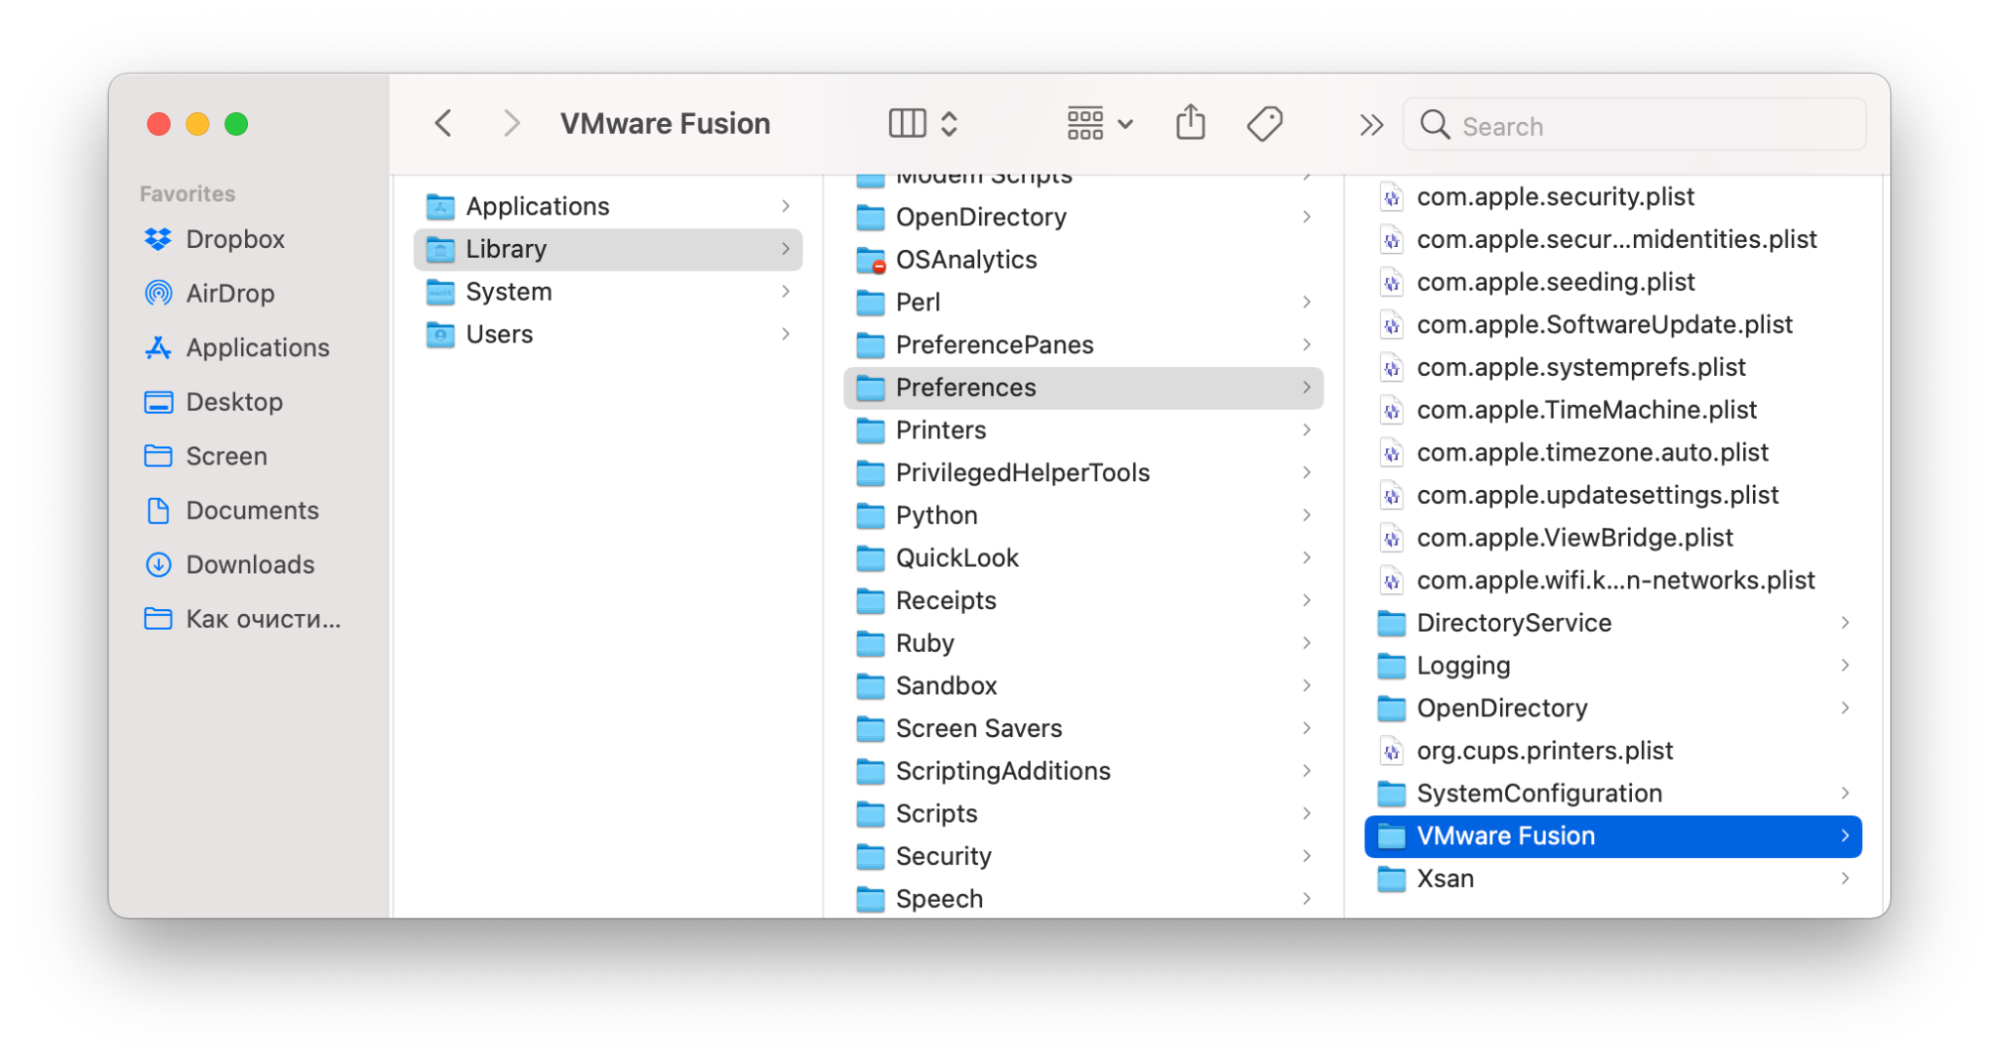 vmware fusion 8.5 show applications menu in menu bar